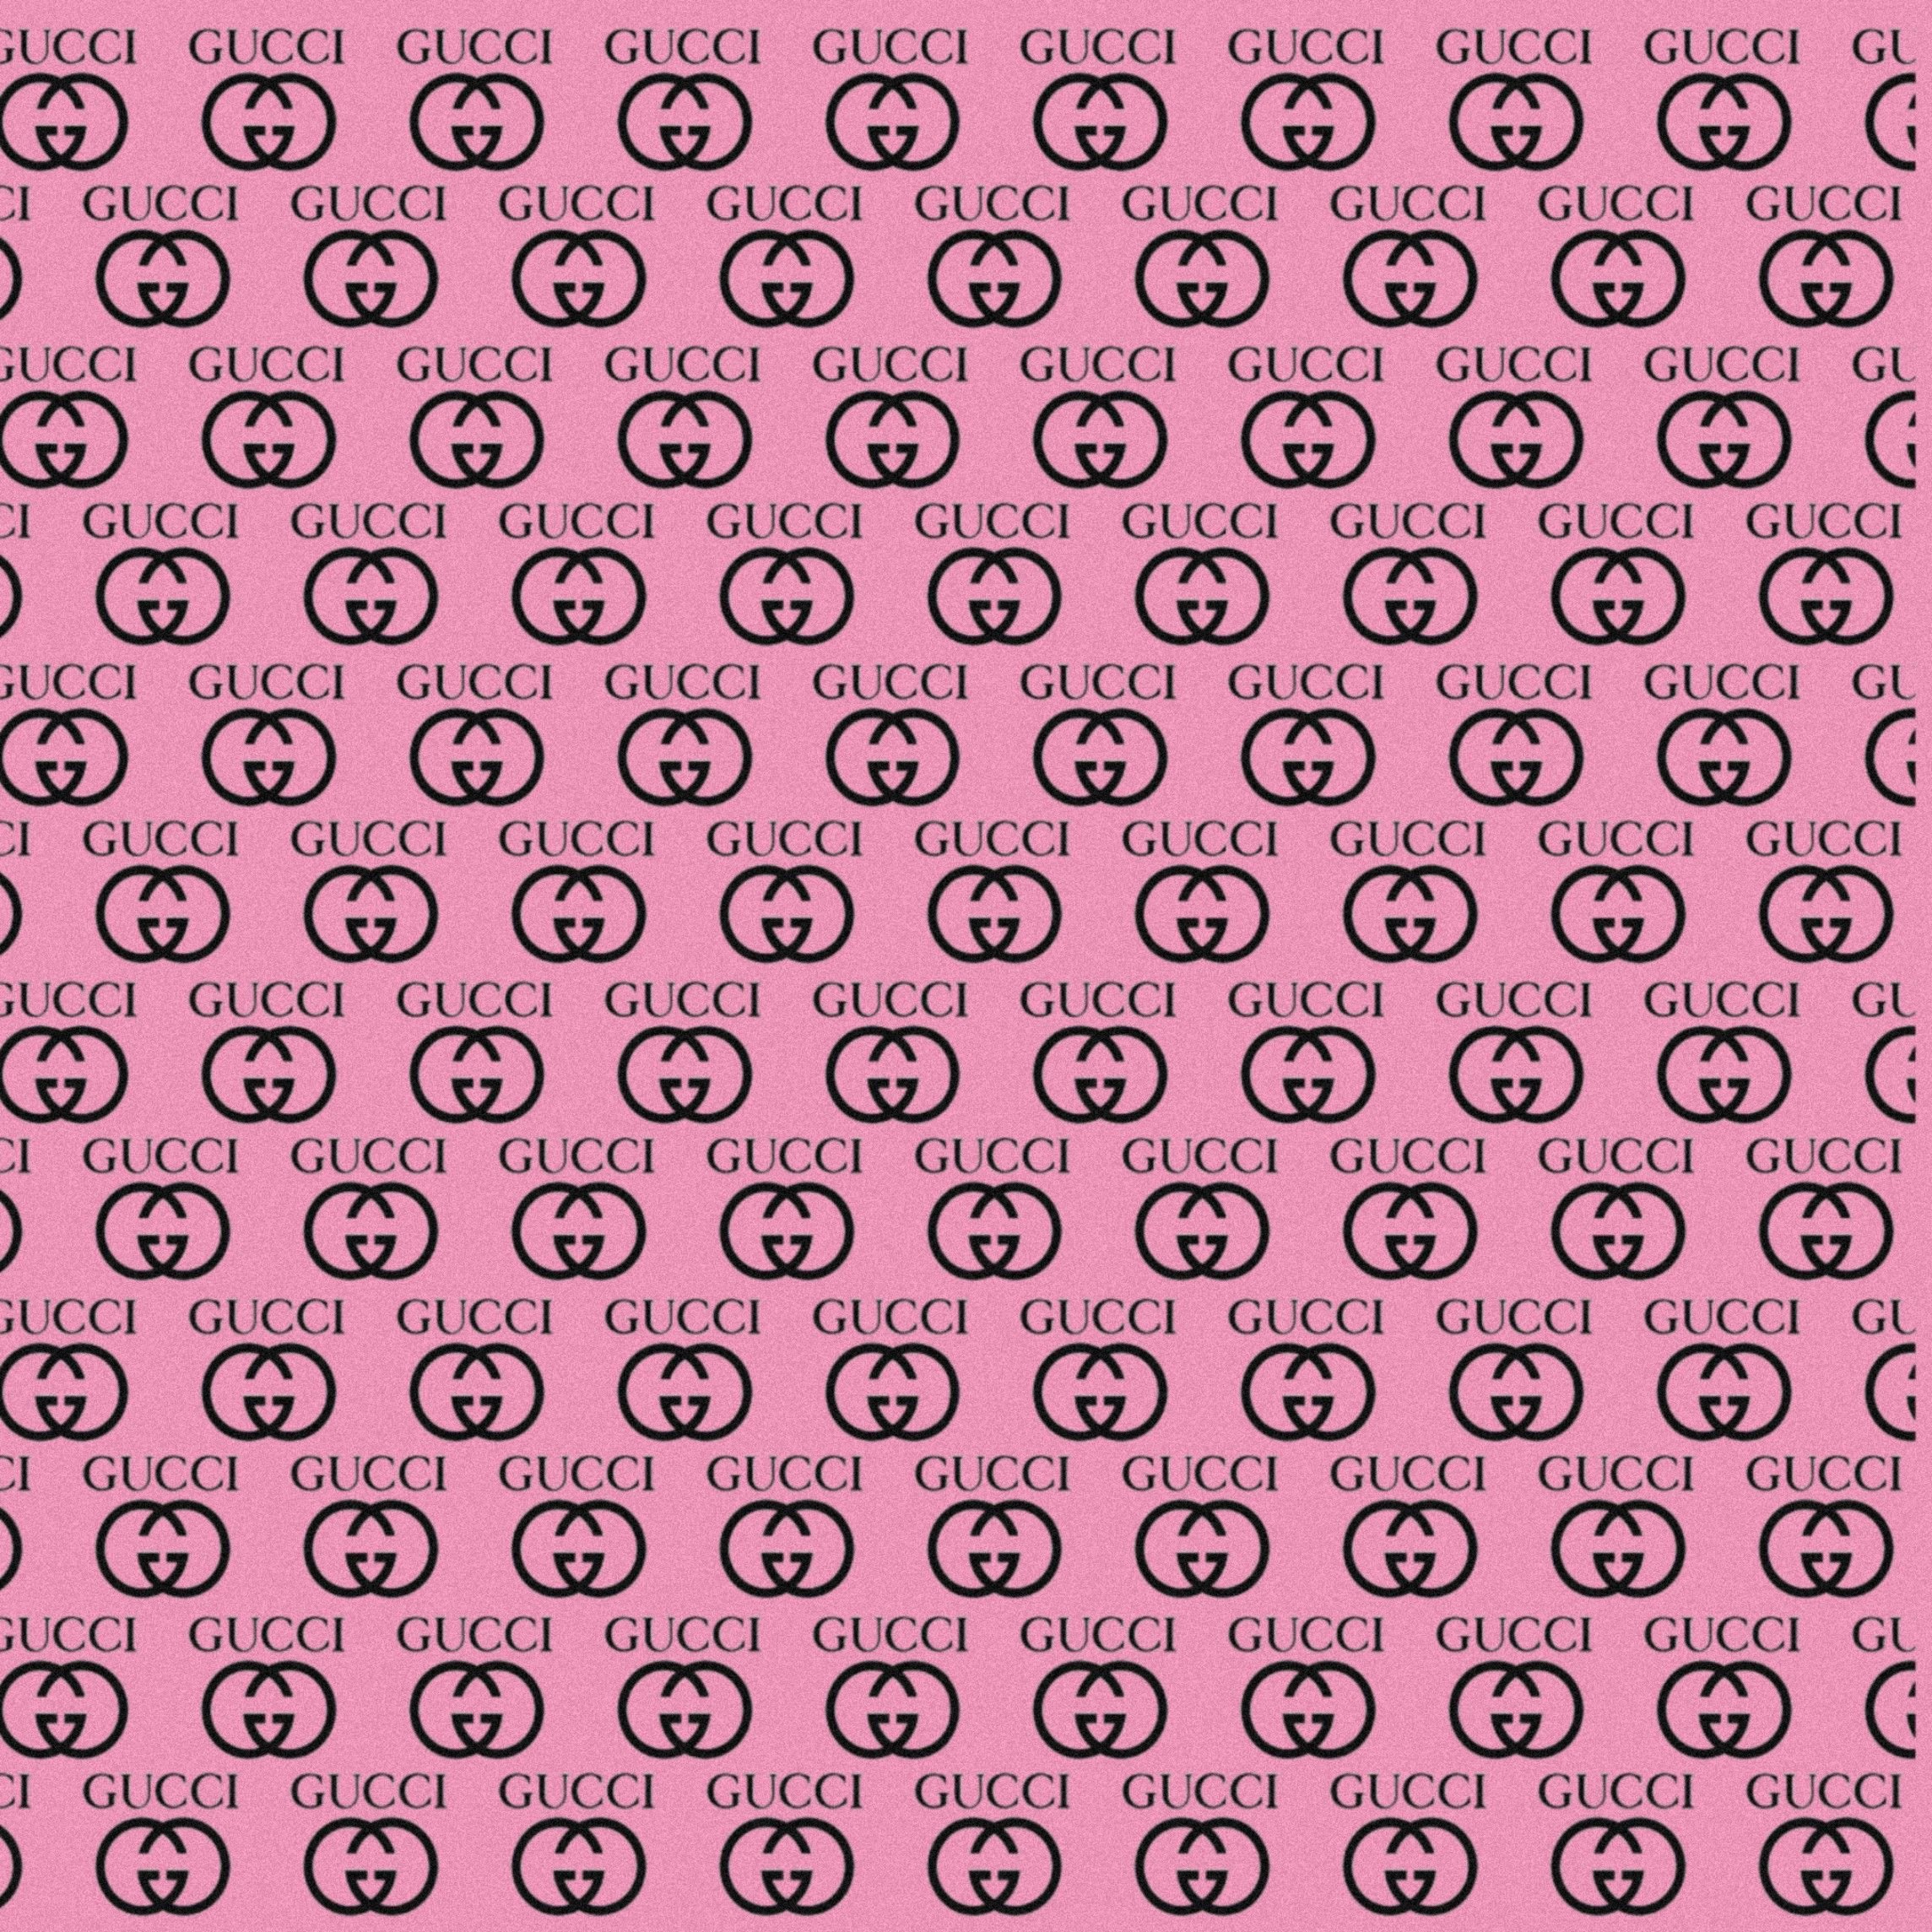 Pink Gucci Wallpapers - Wallpaper Cave